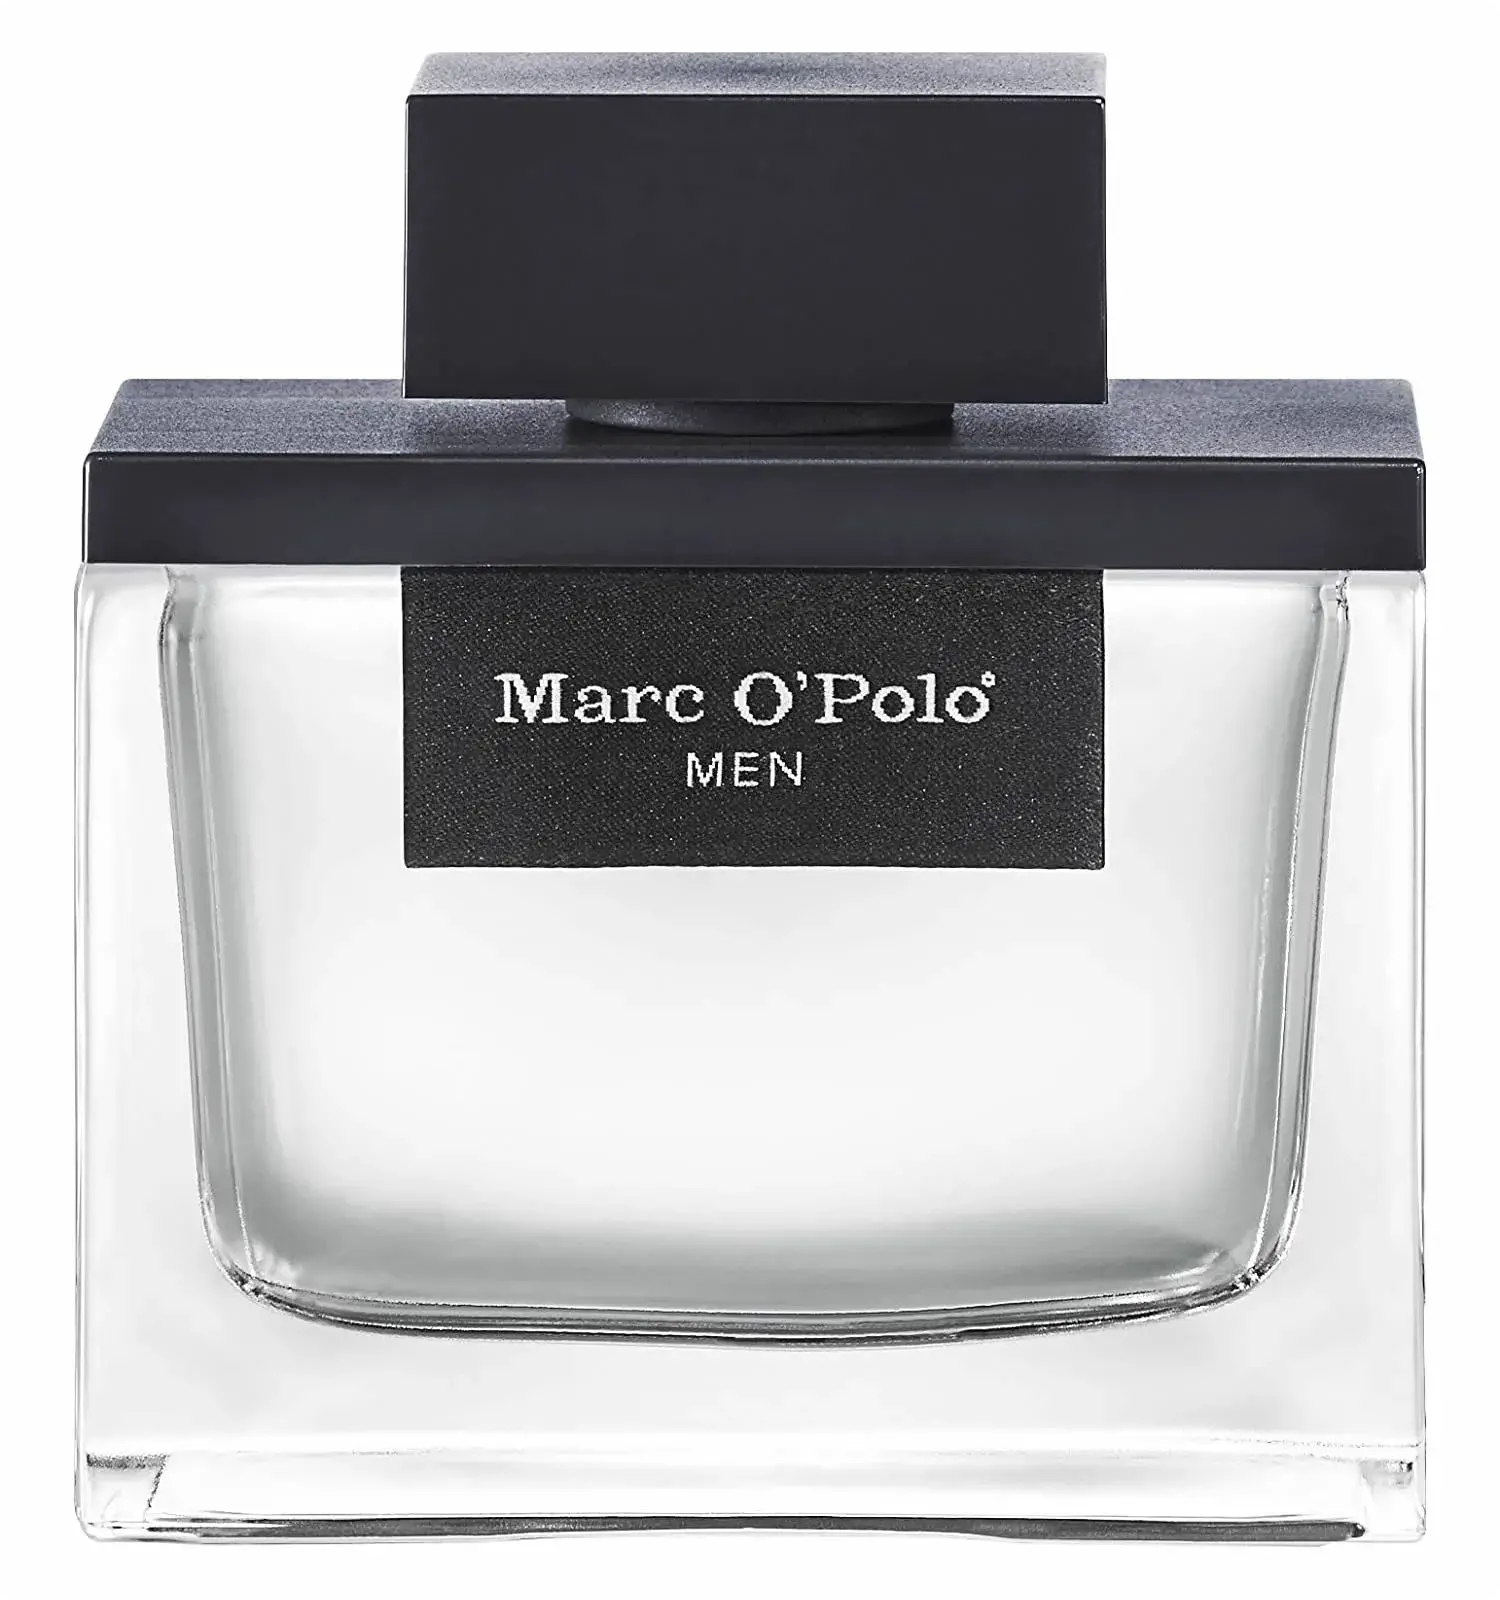 Марко поло Парфюм мужской. Мужская туалетная вода Marc OPOLO. Marc o'Polo духи мужские. Туалетная вода Марко поло для мужчин.